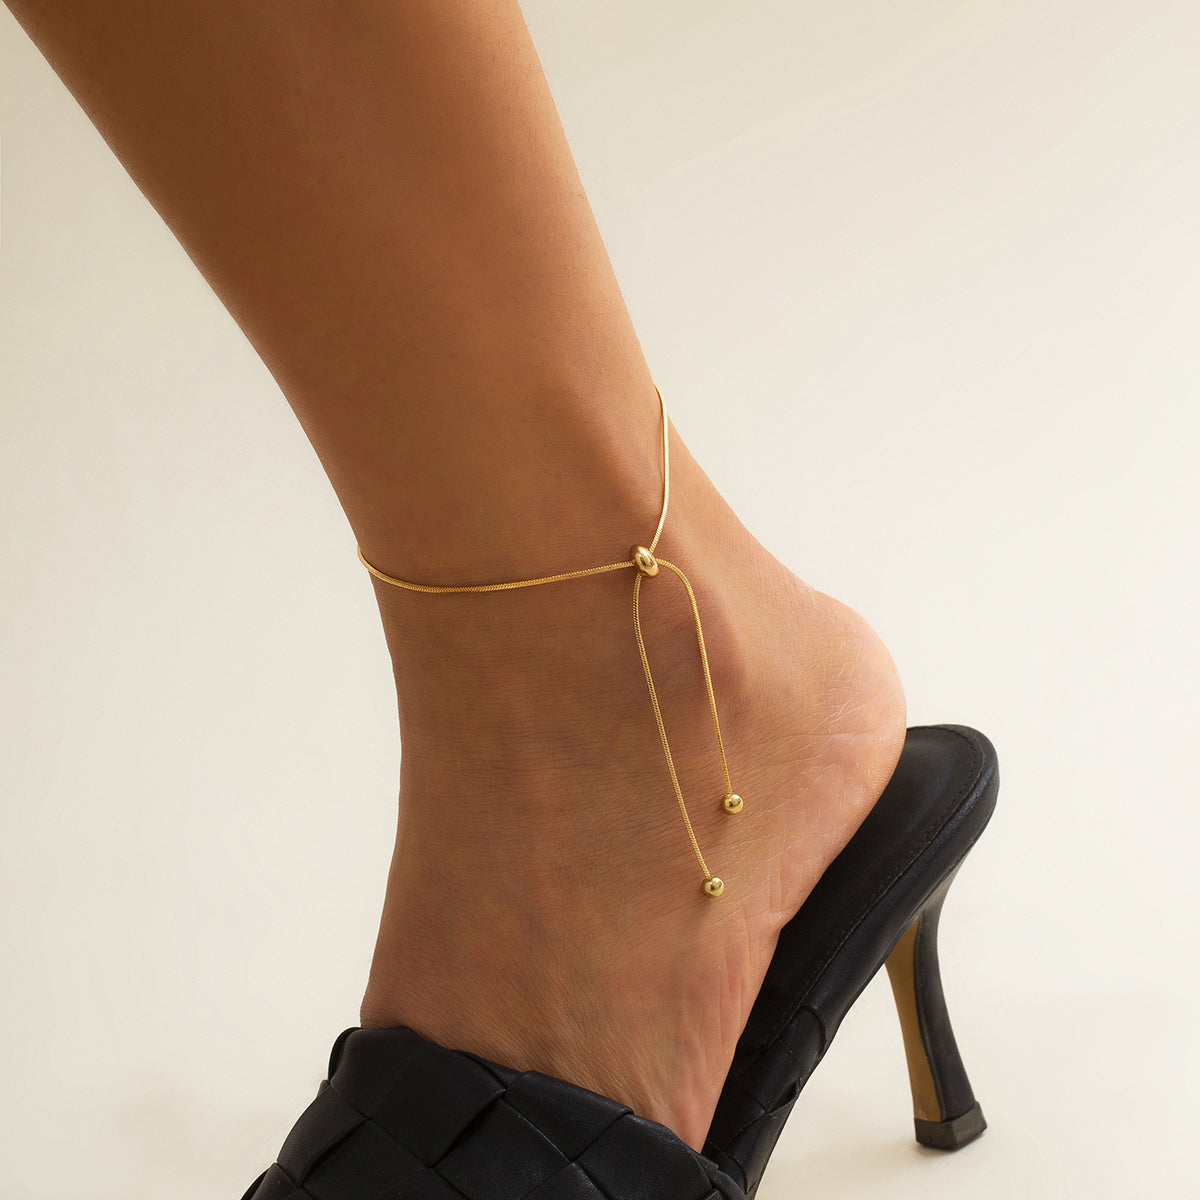 Adjustable Chain Anklet Bracelet for Women